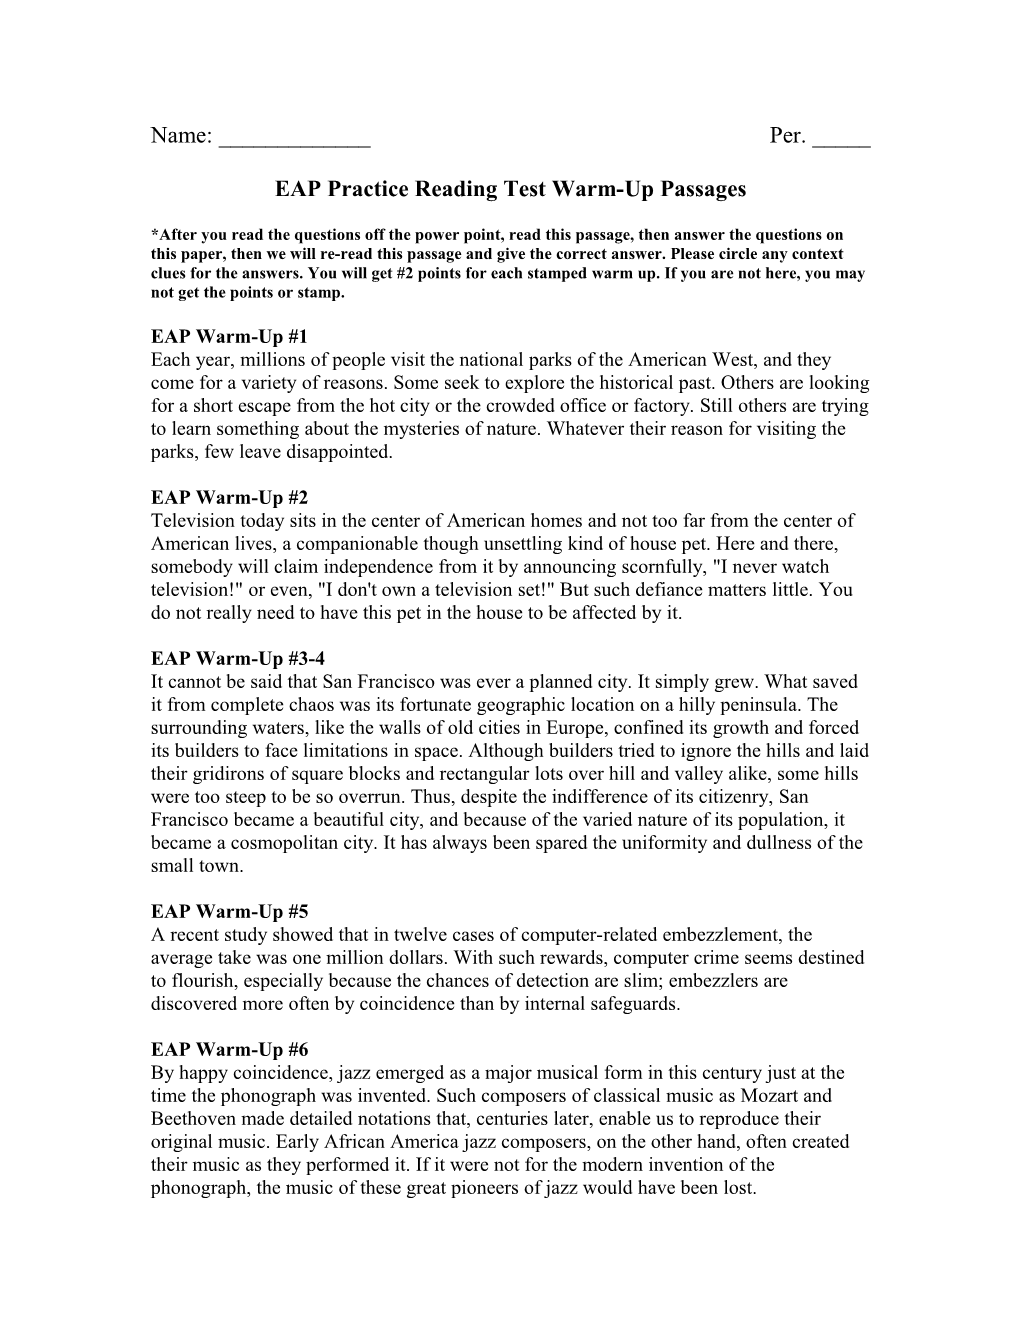 EAP Practice Reading Test Warm-Up Passages